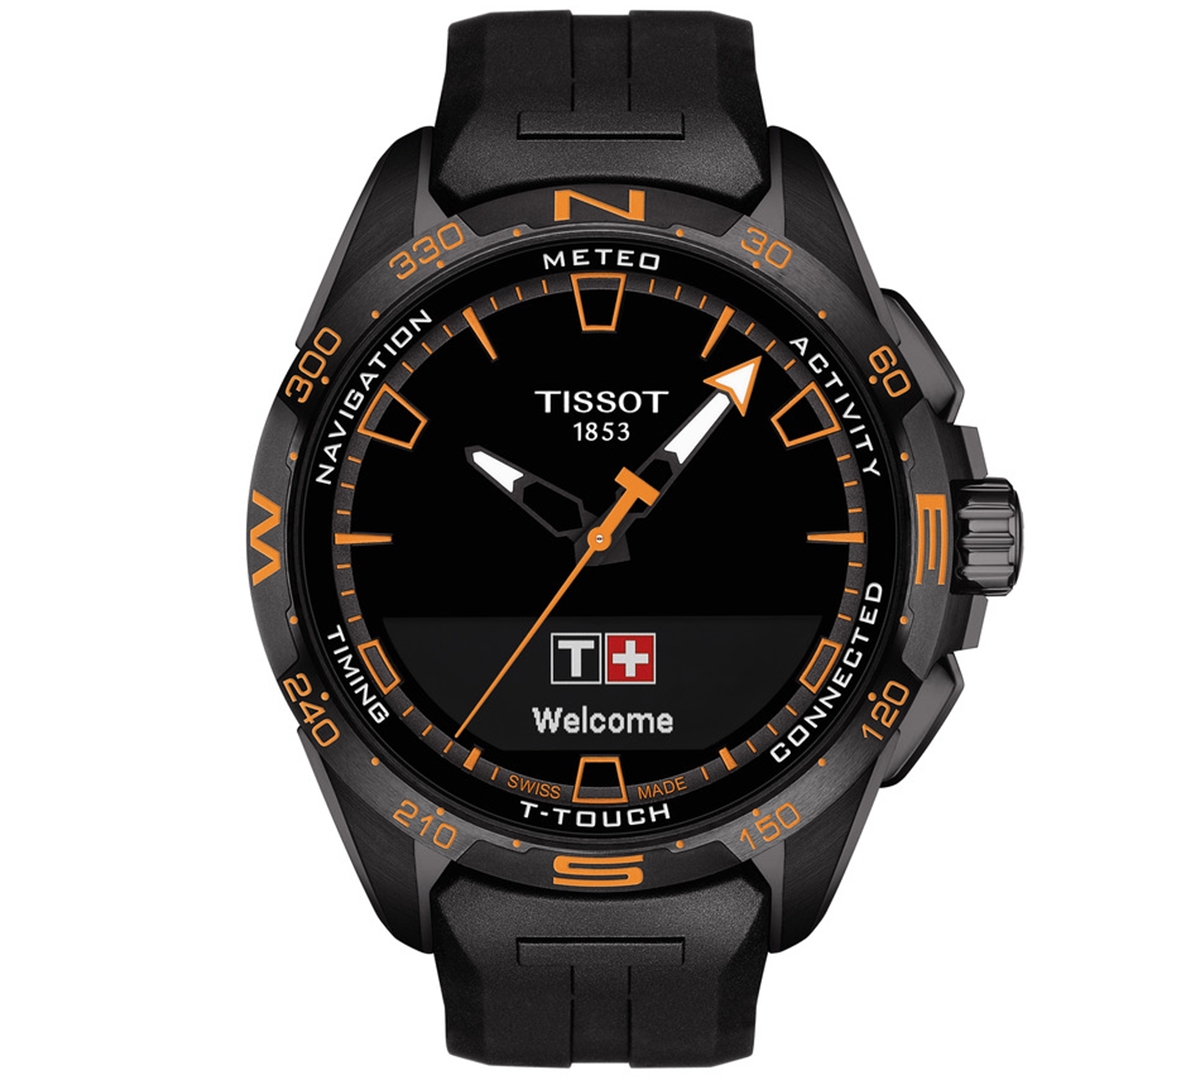 Men's Swiss T-Touch Connect Solar Black Rubber Strap Smart Watch 48mm - Black